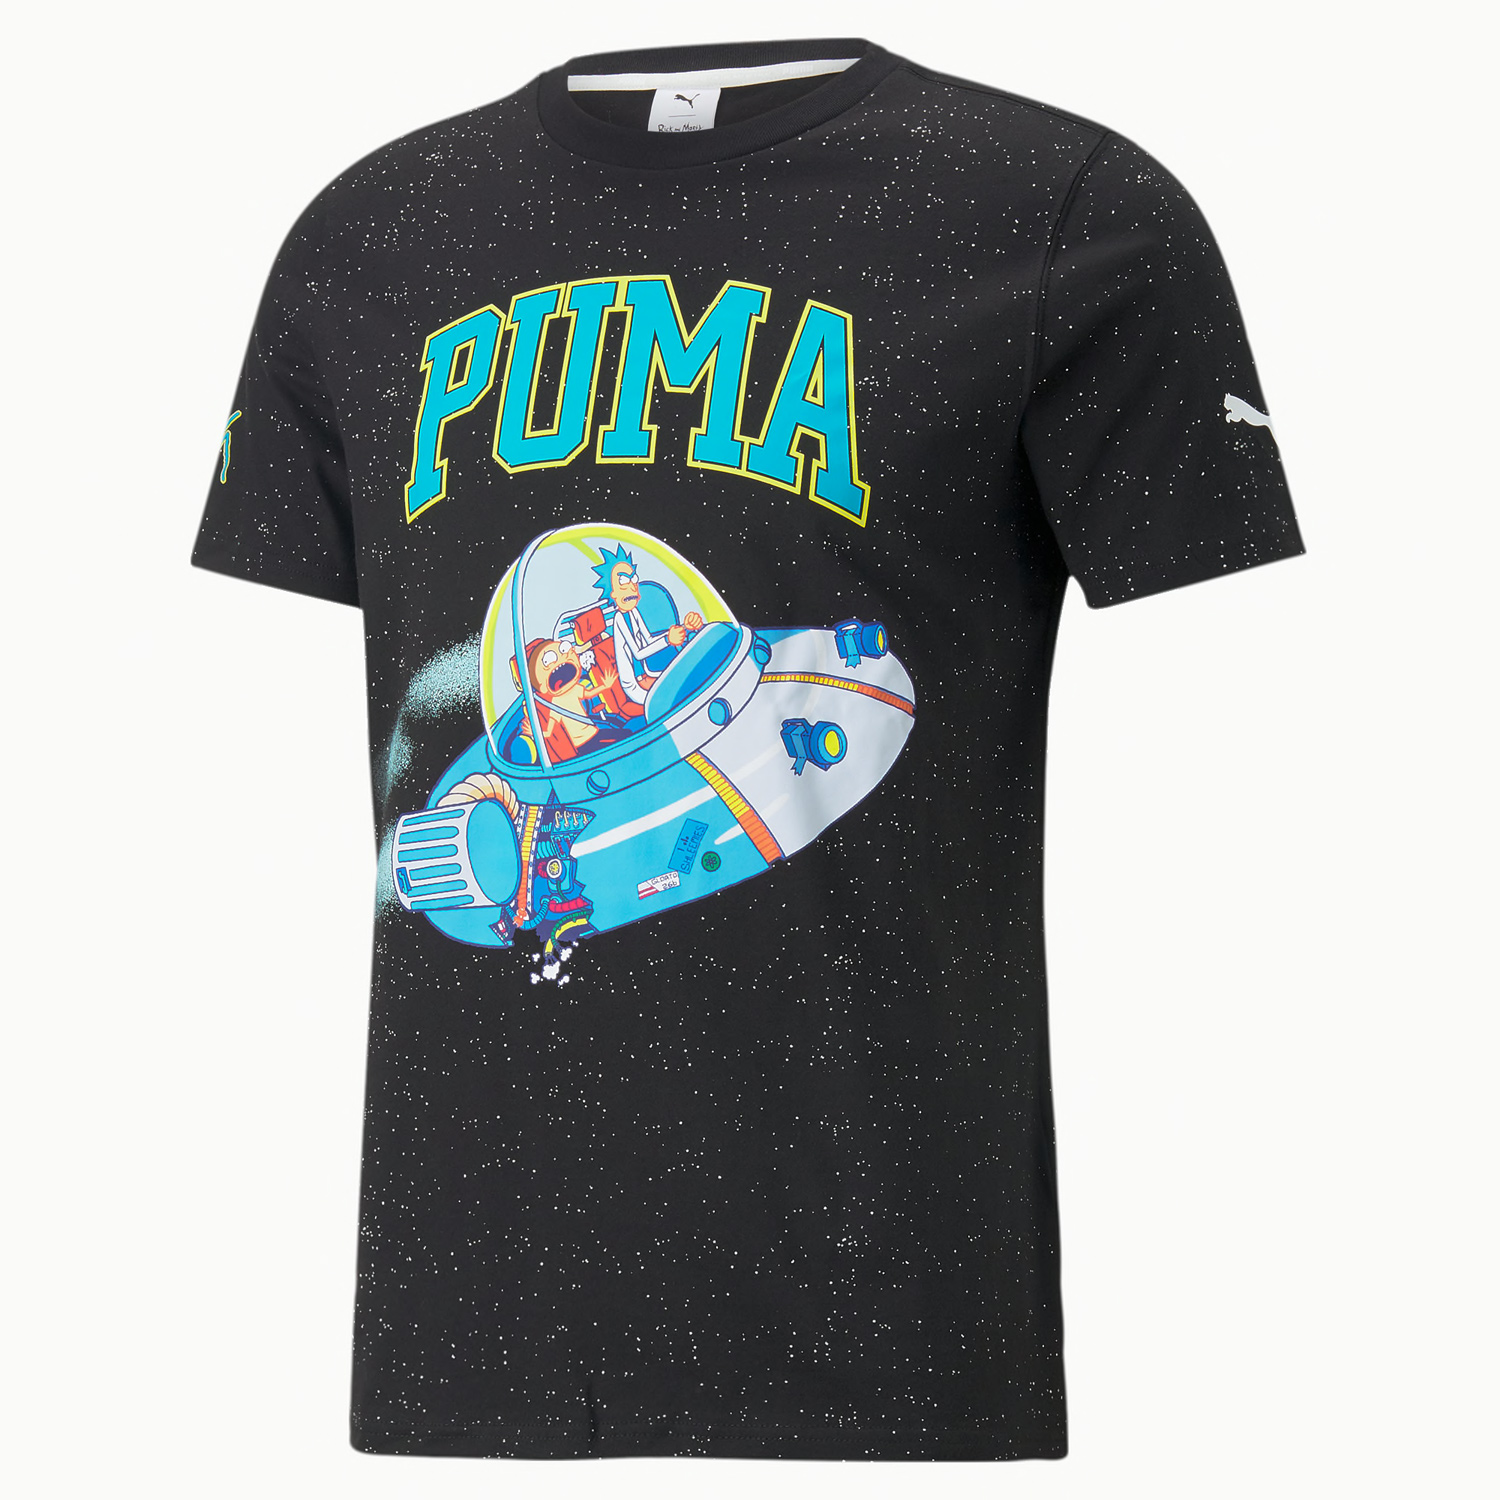 puma-rick-and-morty-shirt-1